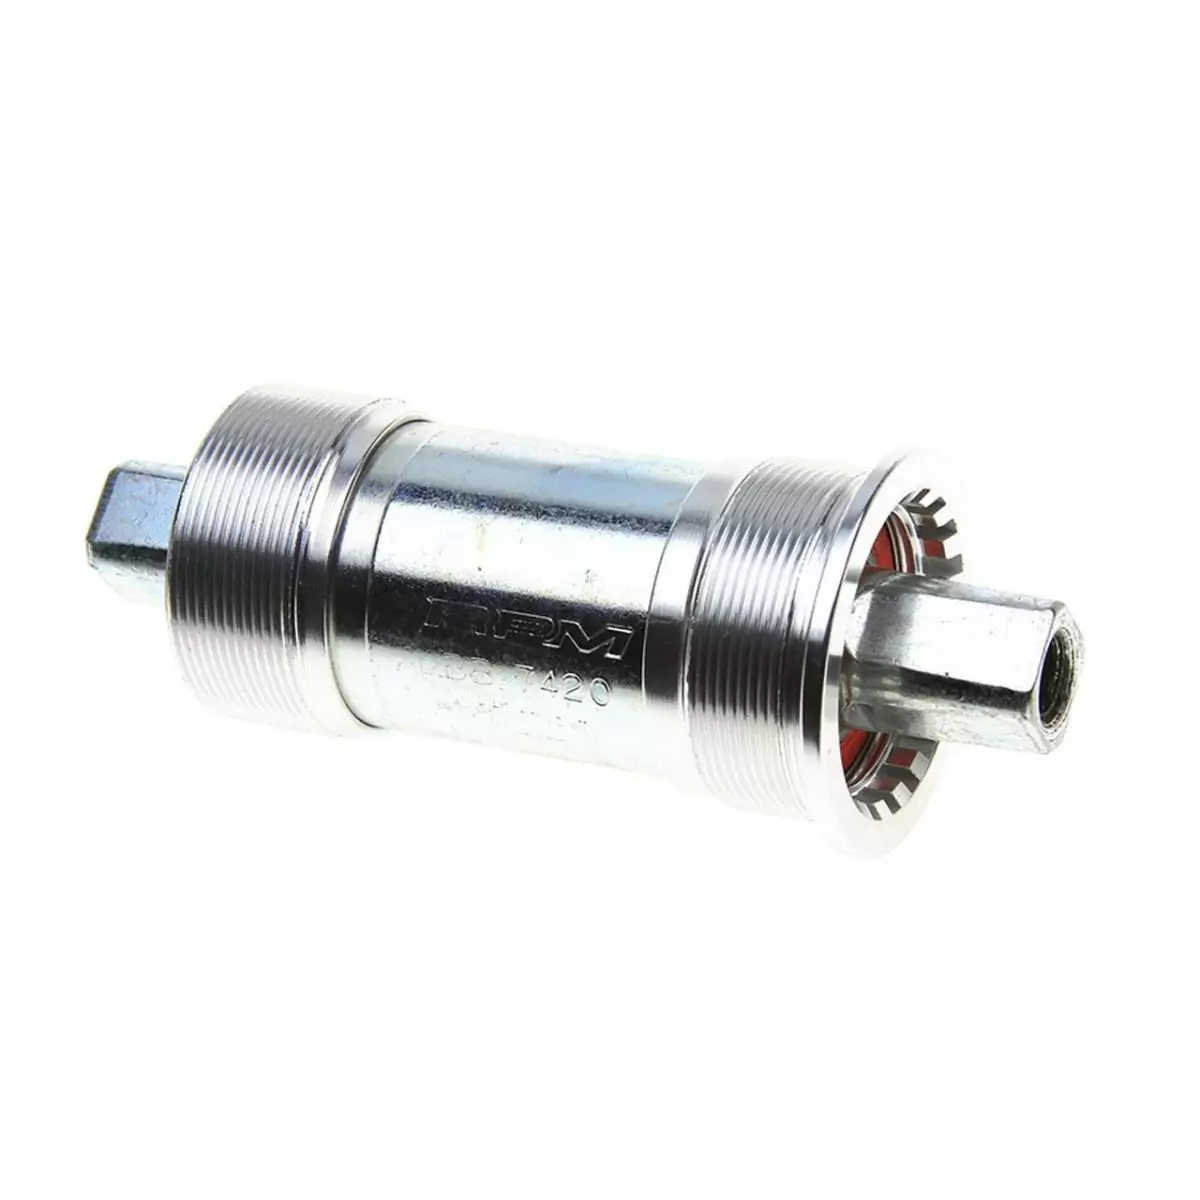 Pedalier acero power pro bb-7420al jis 68x103mm - image